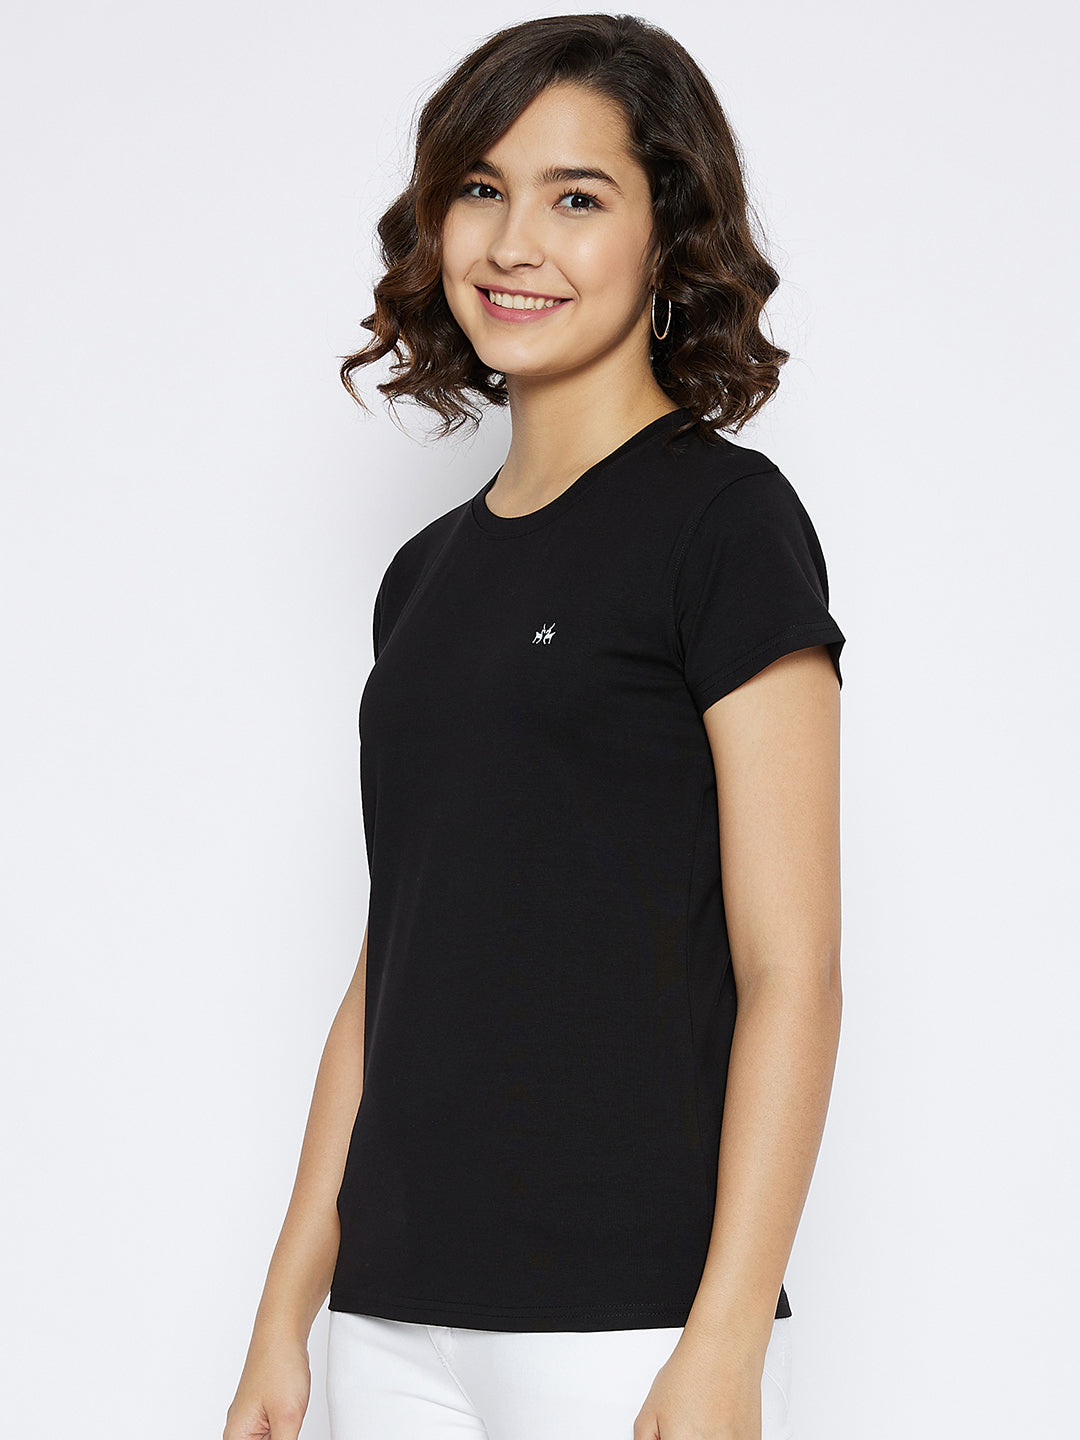 Black Round Neck T-shirt - Women T-Shirts